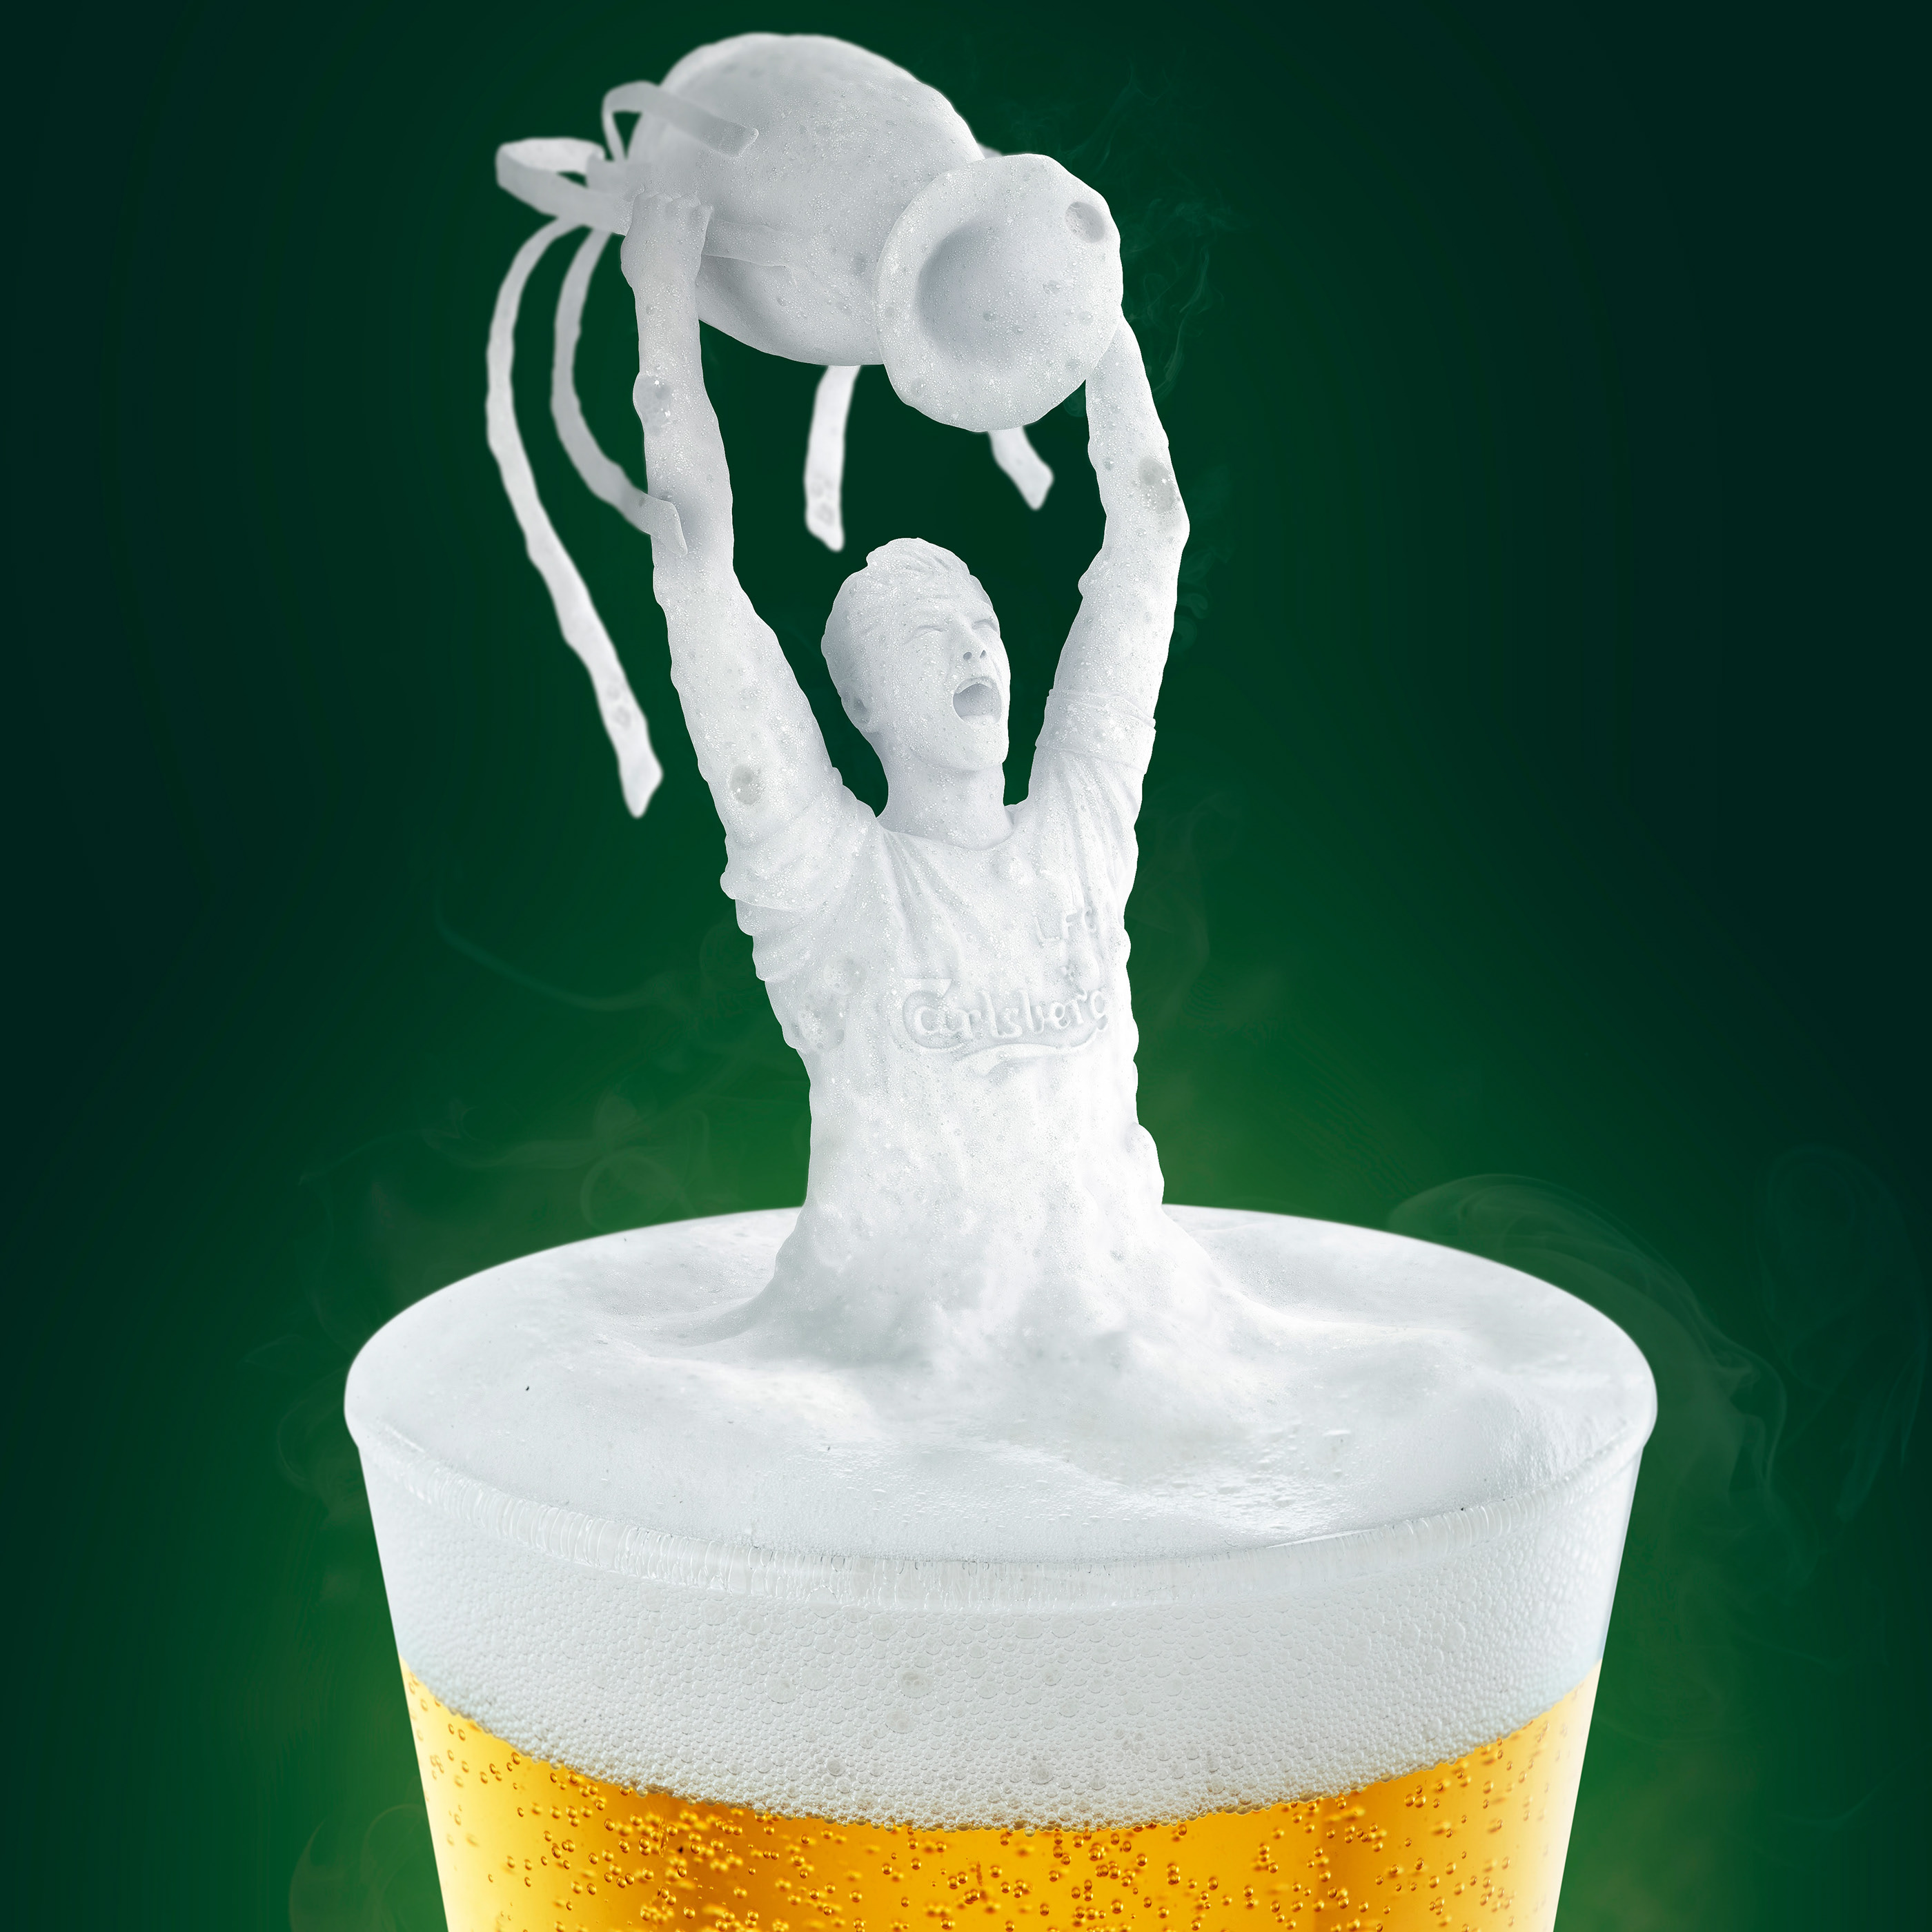 Carlsberg beer foam-scape.